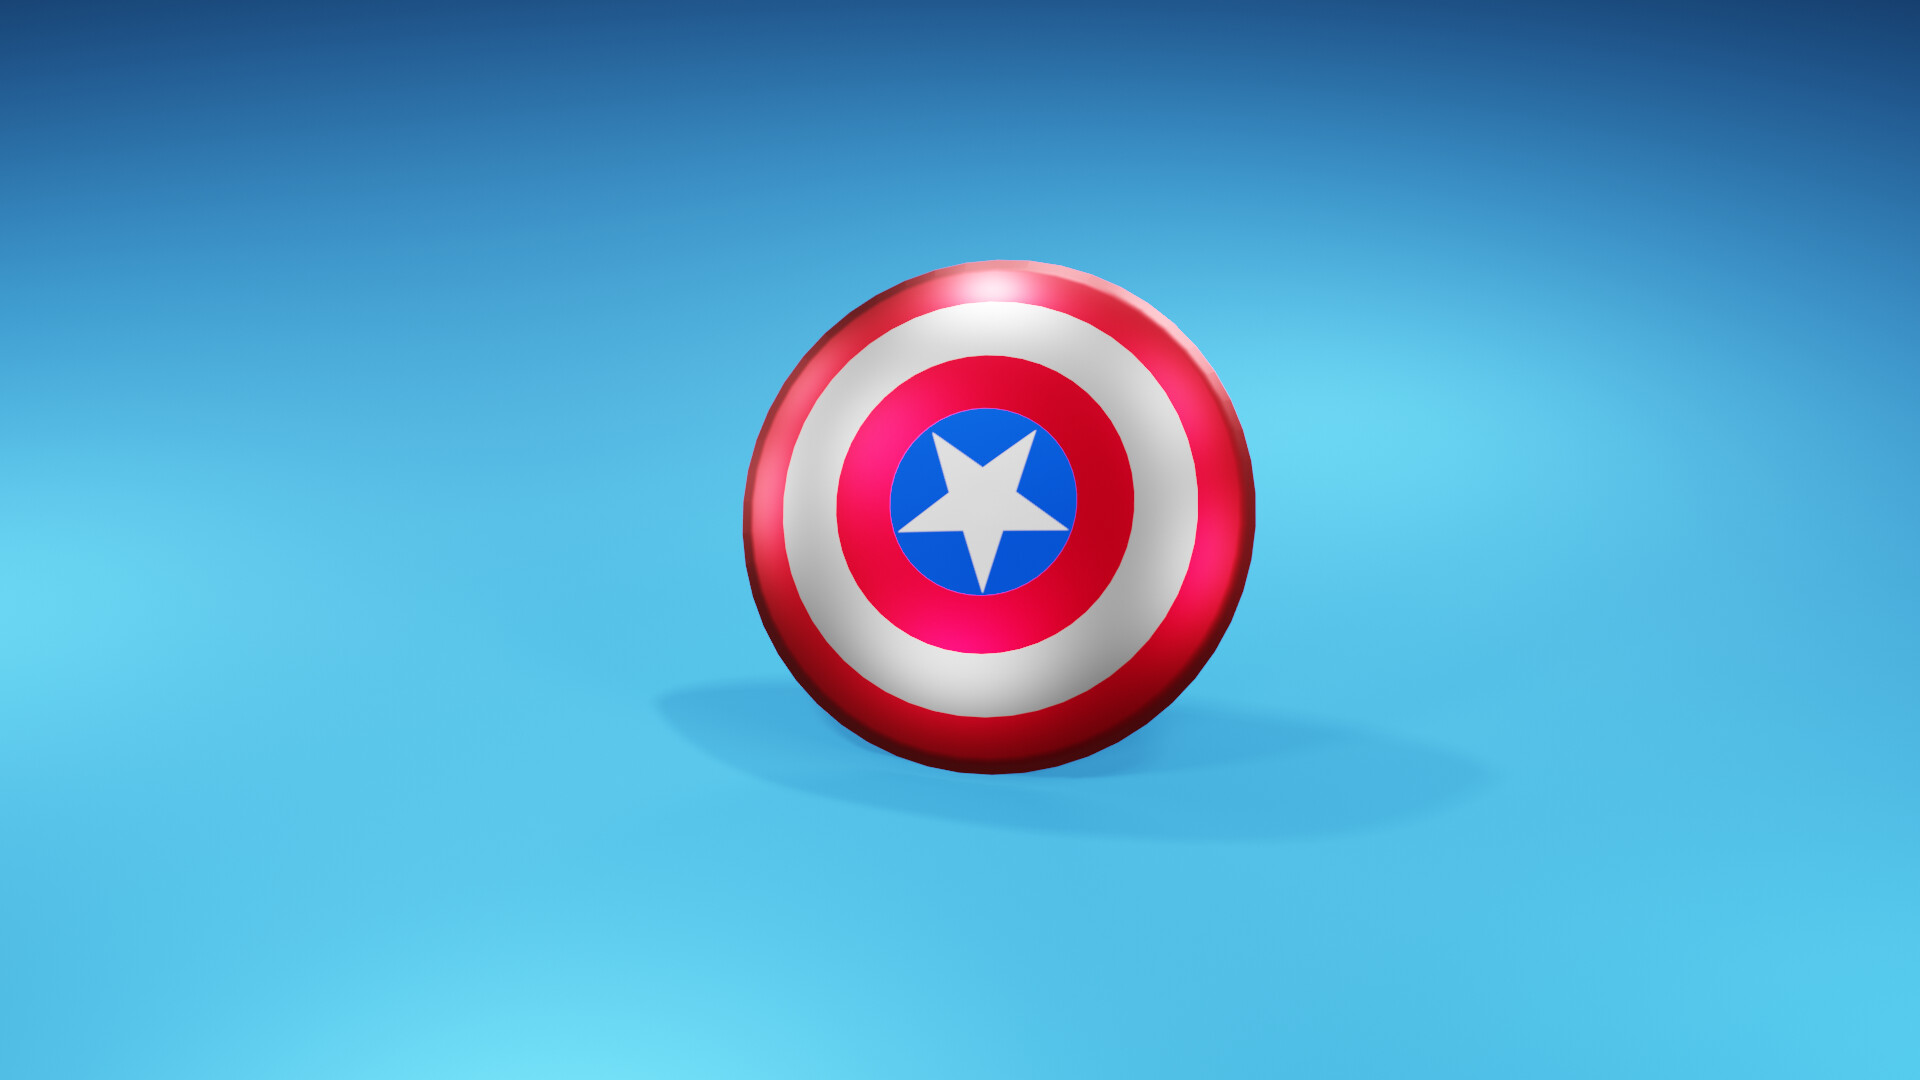 ArtStation - Captain America shield